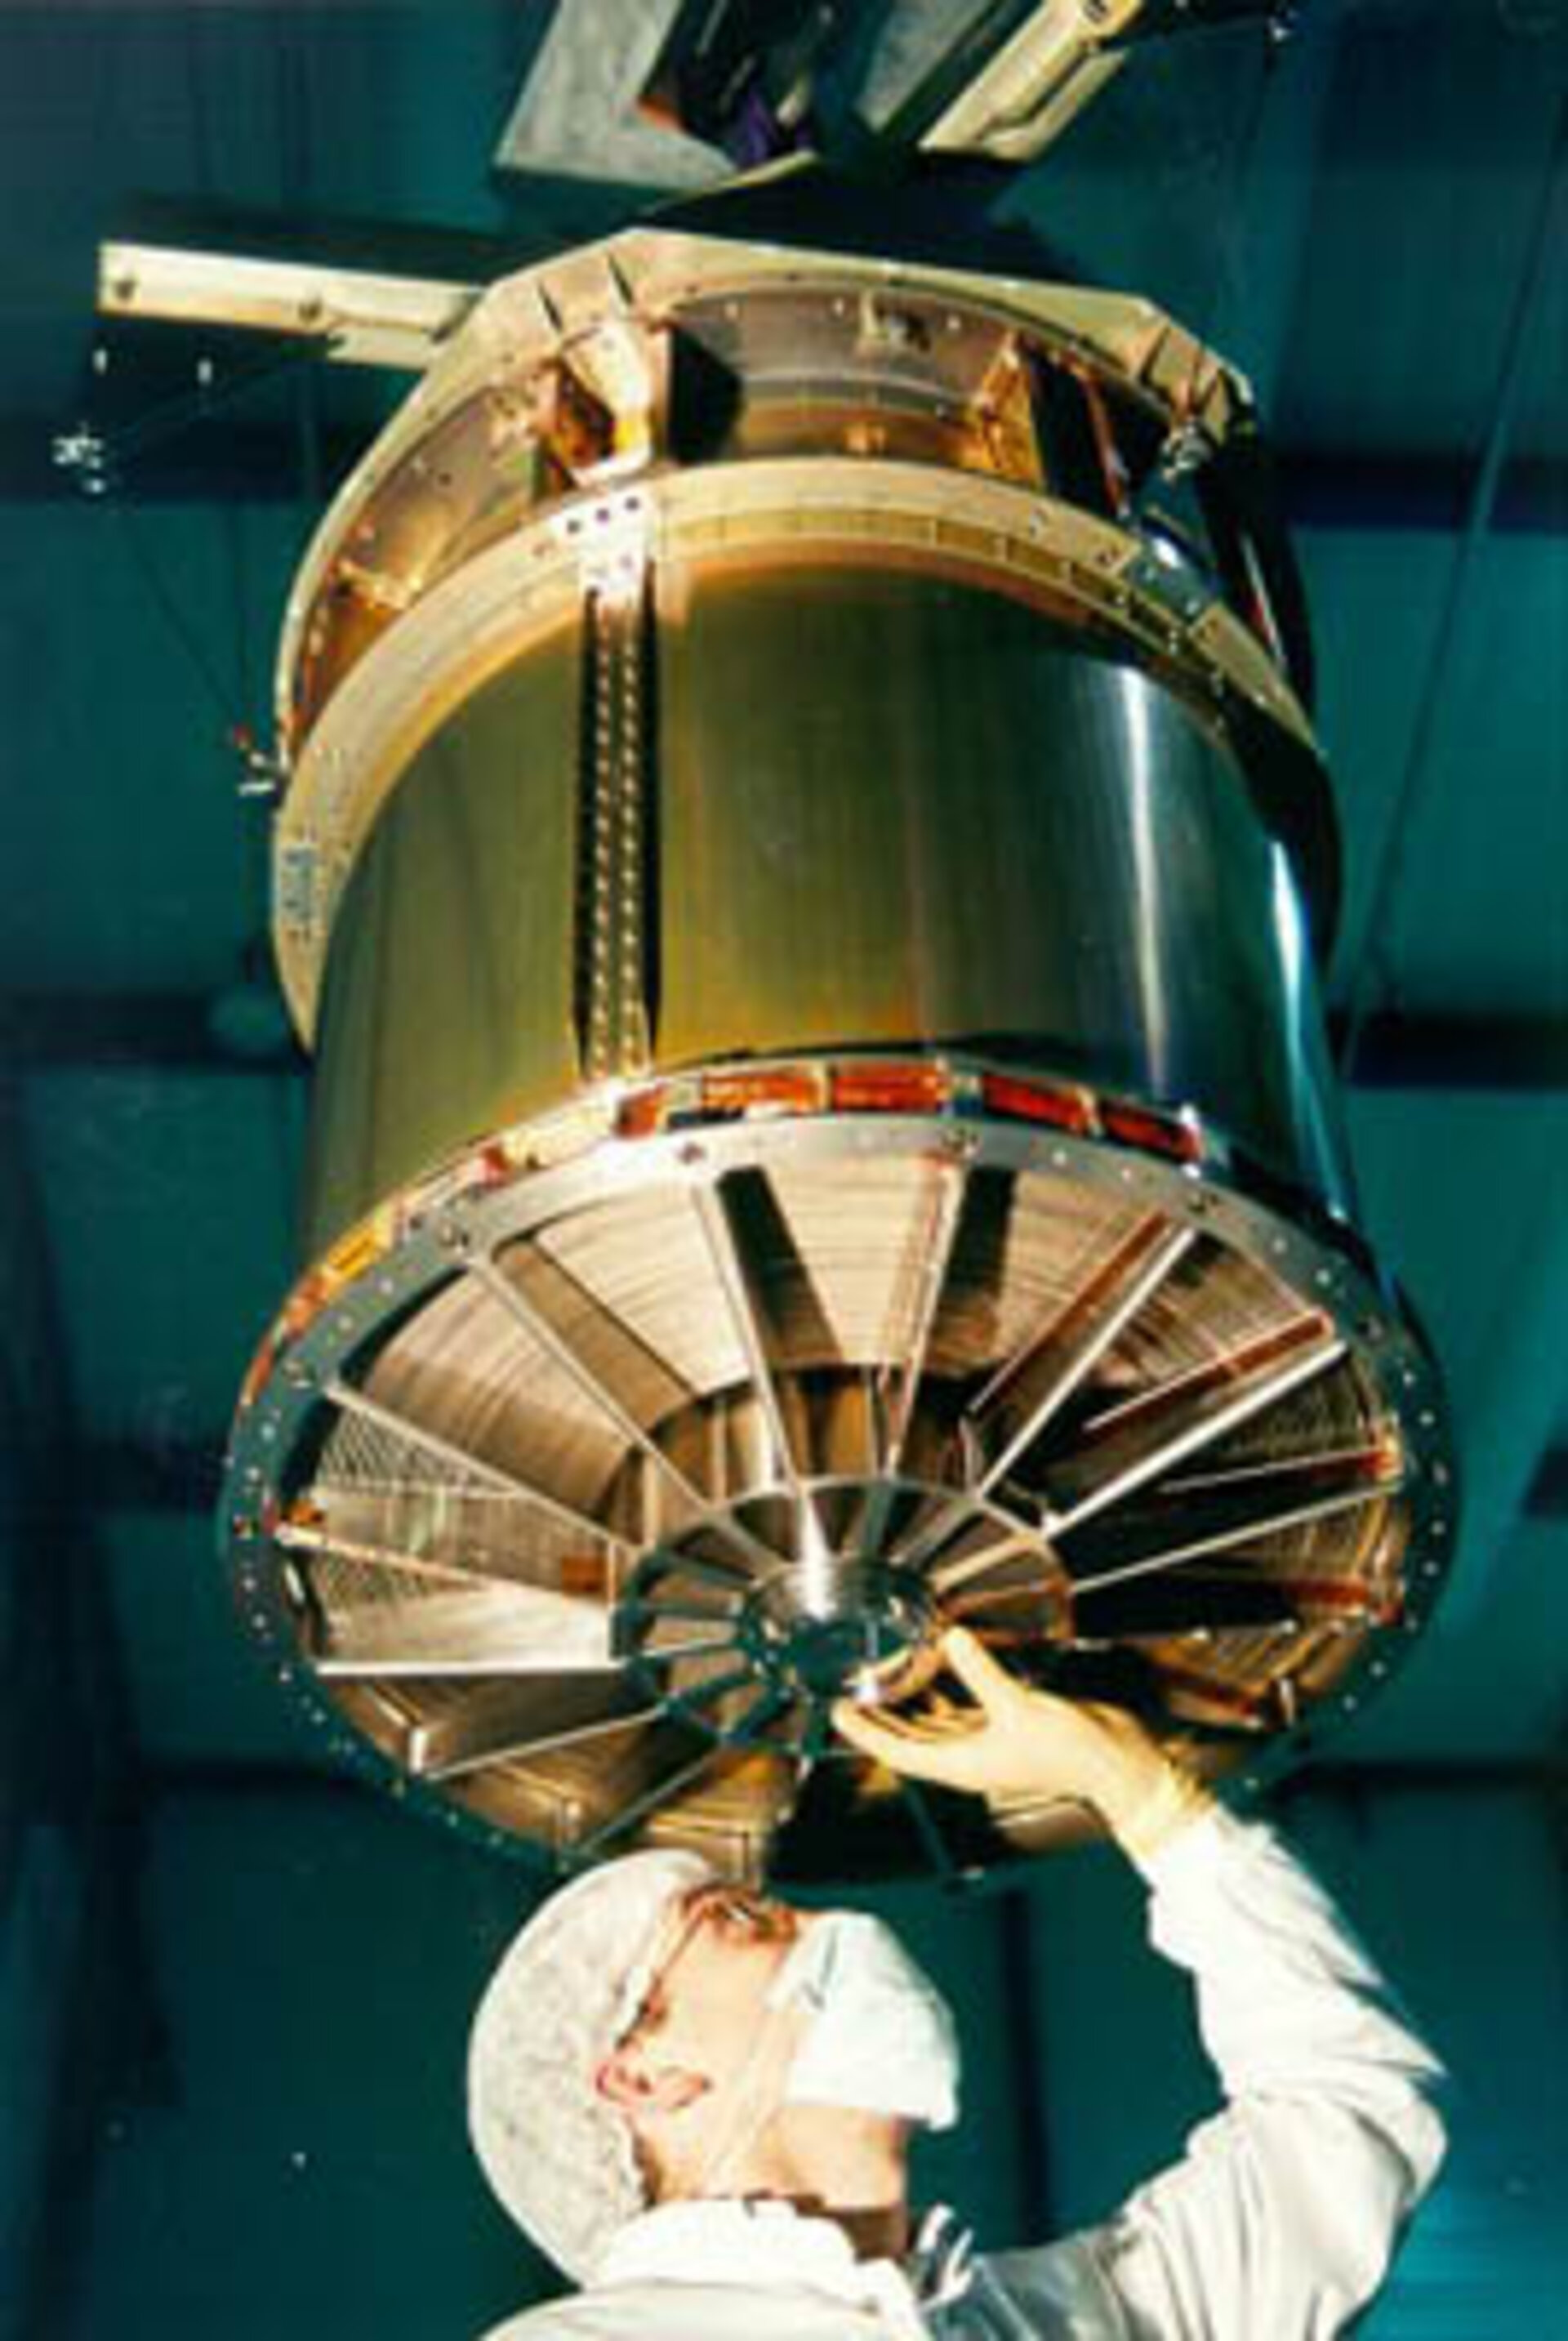 One of three mirror modules for ESA's XMM-Newton satellite, flight model